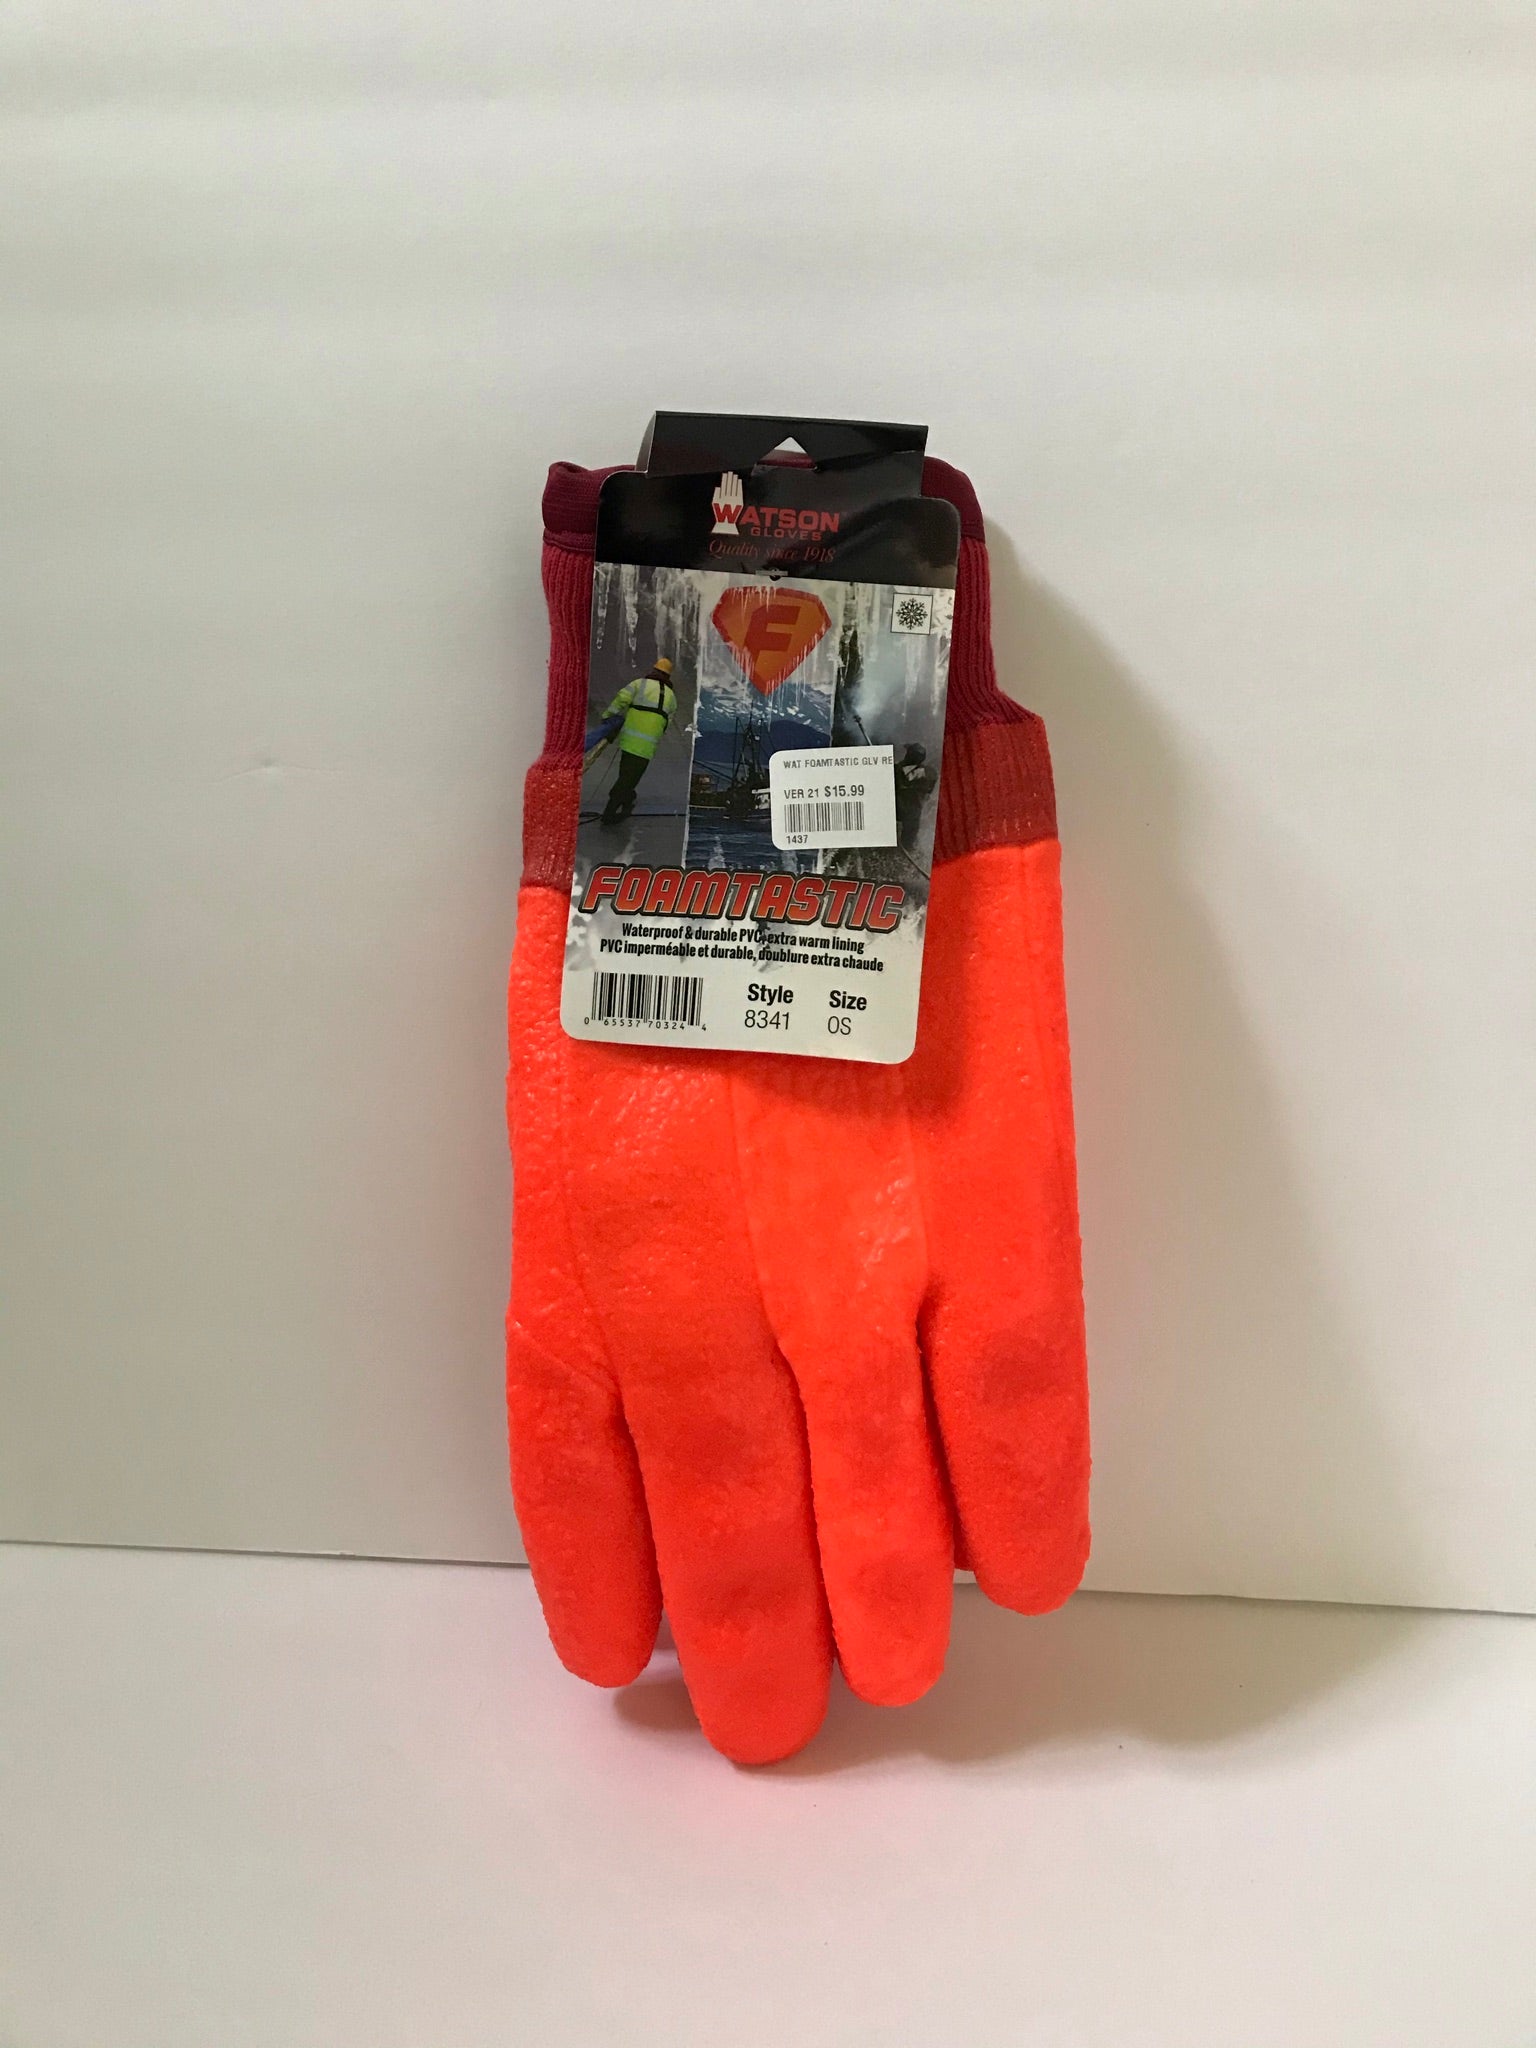 Watson 8341 Foamtastic Glove - Red Cuff